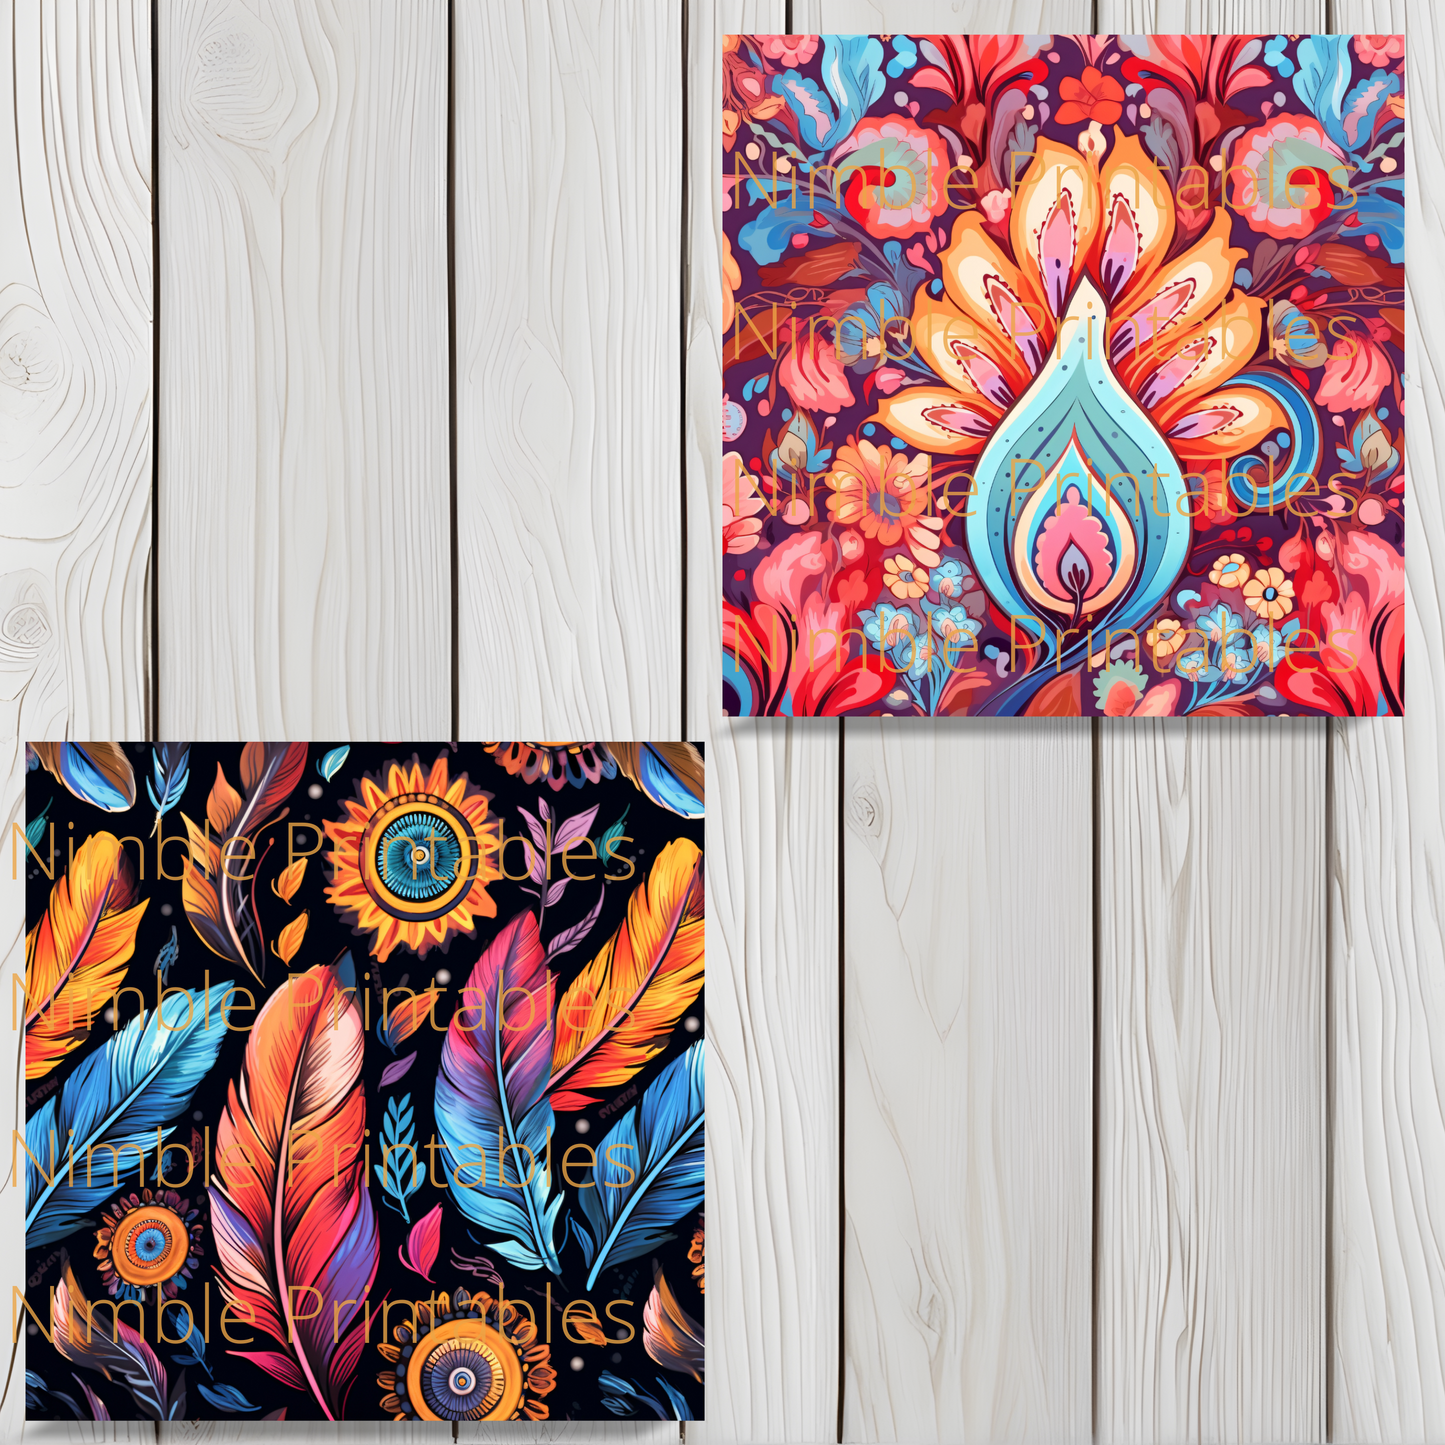 Boho Hippie Floral Square Coaster PNG, Coaster Bundle, Floral png, Boho PNG, Instant Downloads Sublimation Design Hippie png